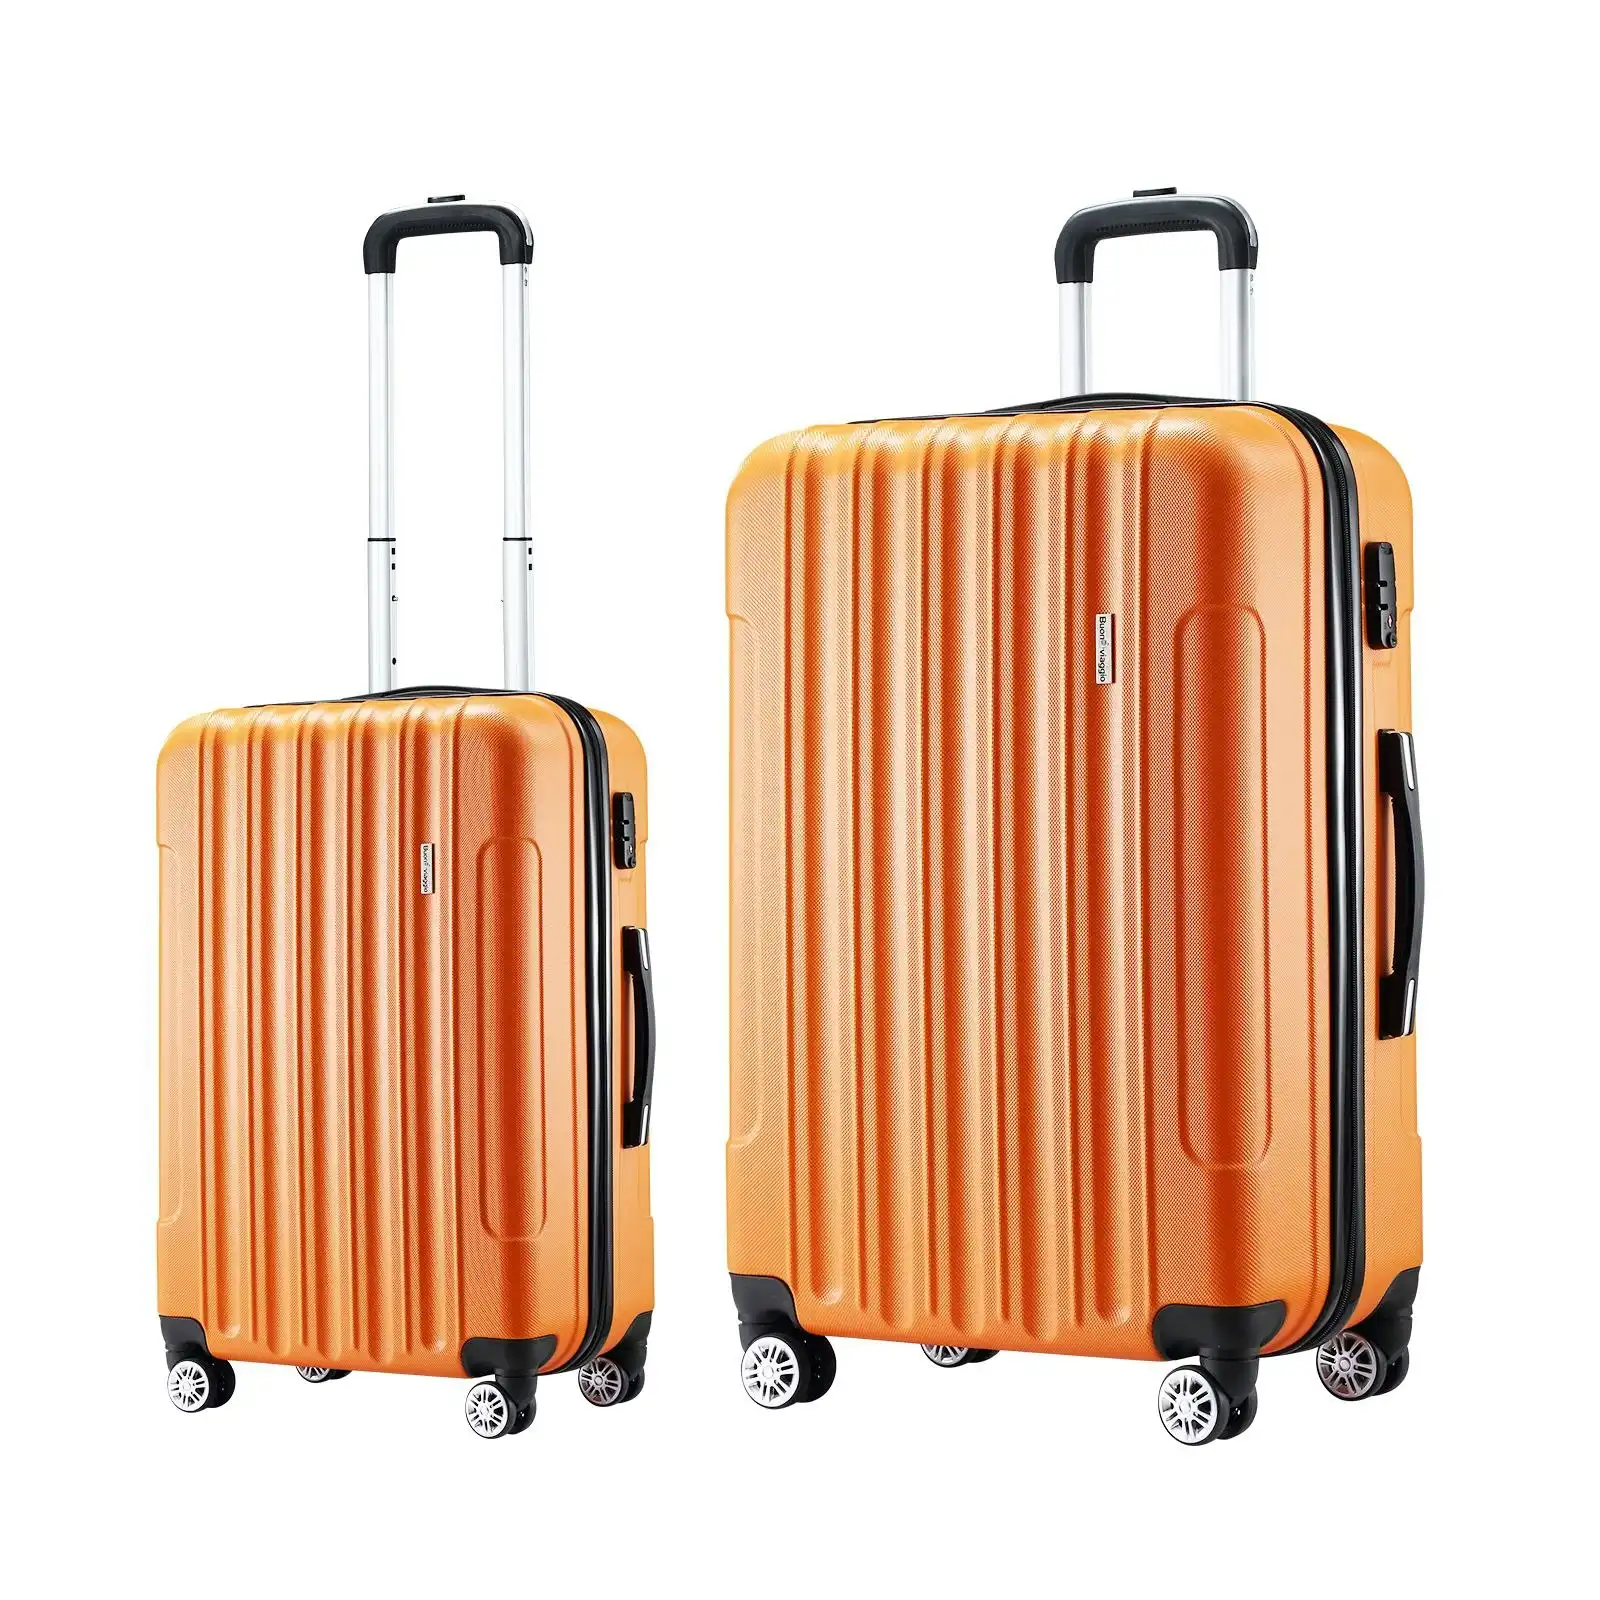 Buon Viaggio 2 PCS Luggage Set Travel Suitcases Hard Carry On Rolling Trolley Lightweight with TSA Lock Orange